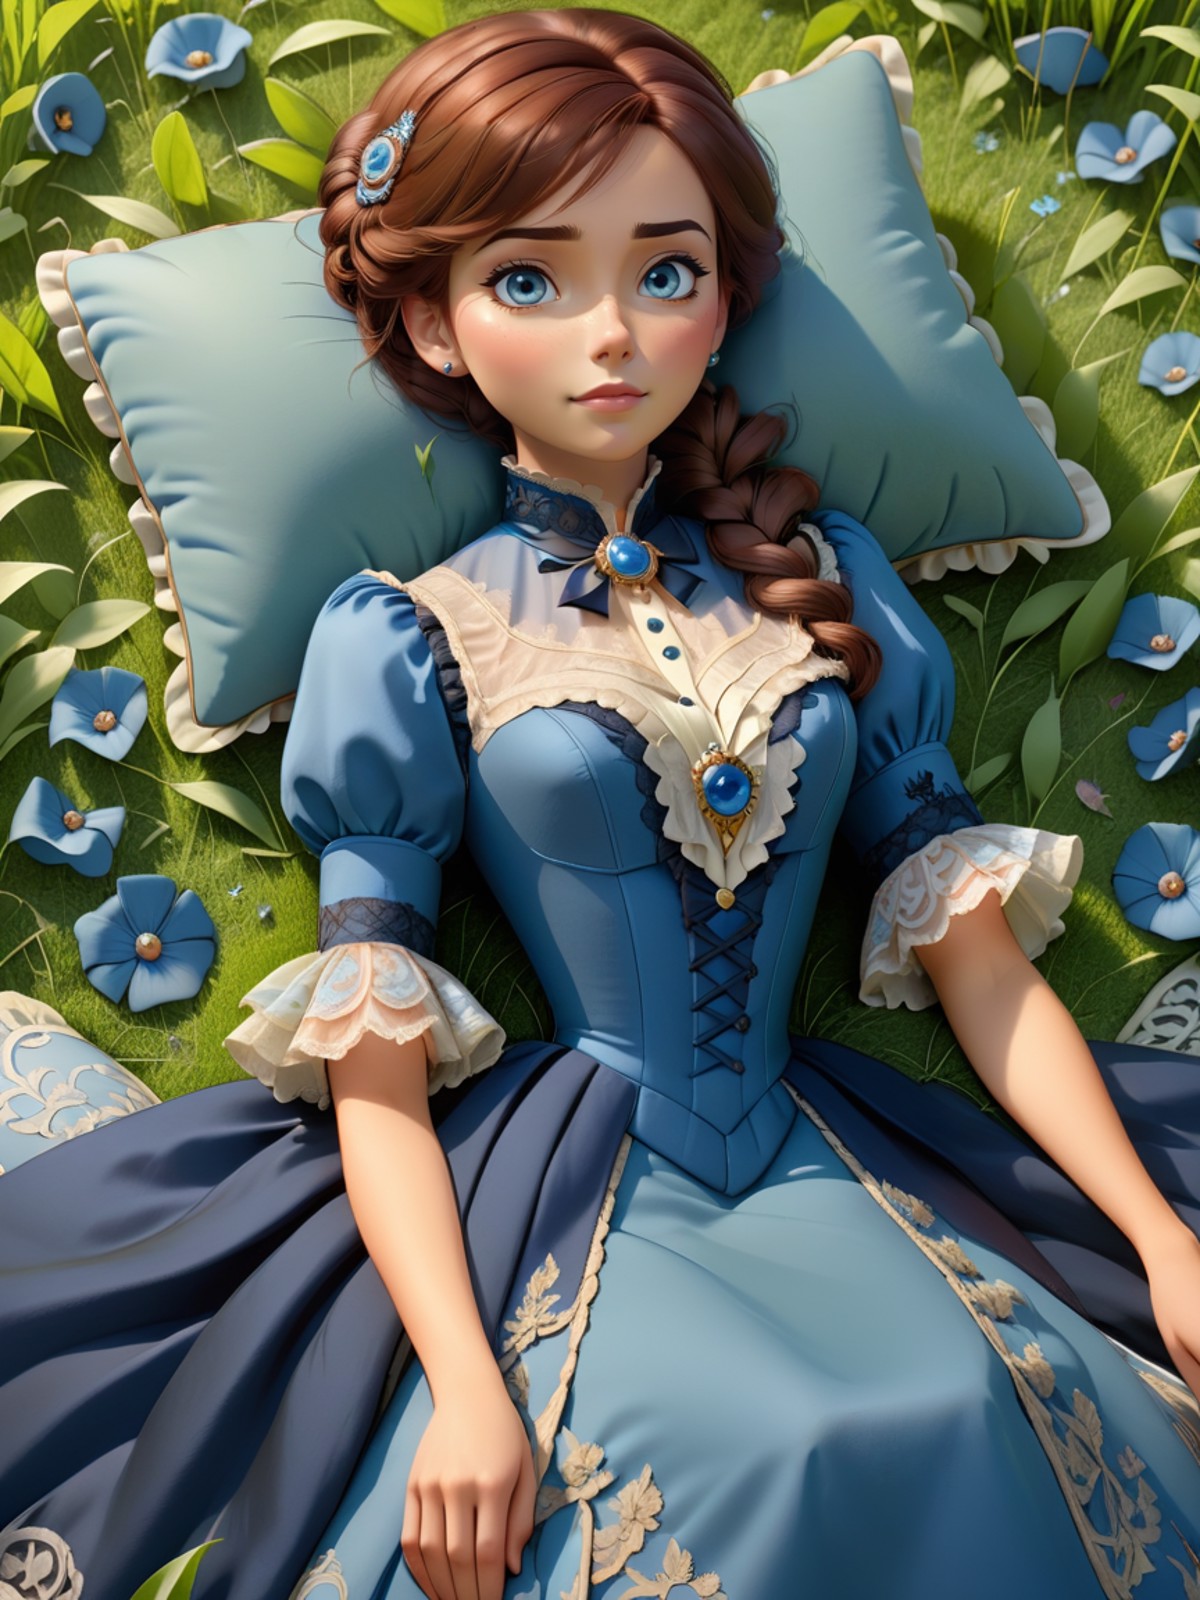 breathtaking woman wearing a blue (victorian dress), <lora:victorian_dress-XL-2.0:1>
lying on grass, pixar, pillow . award...